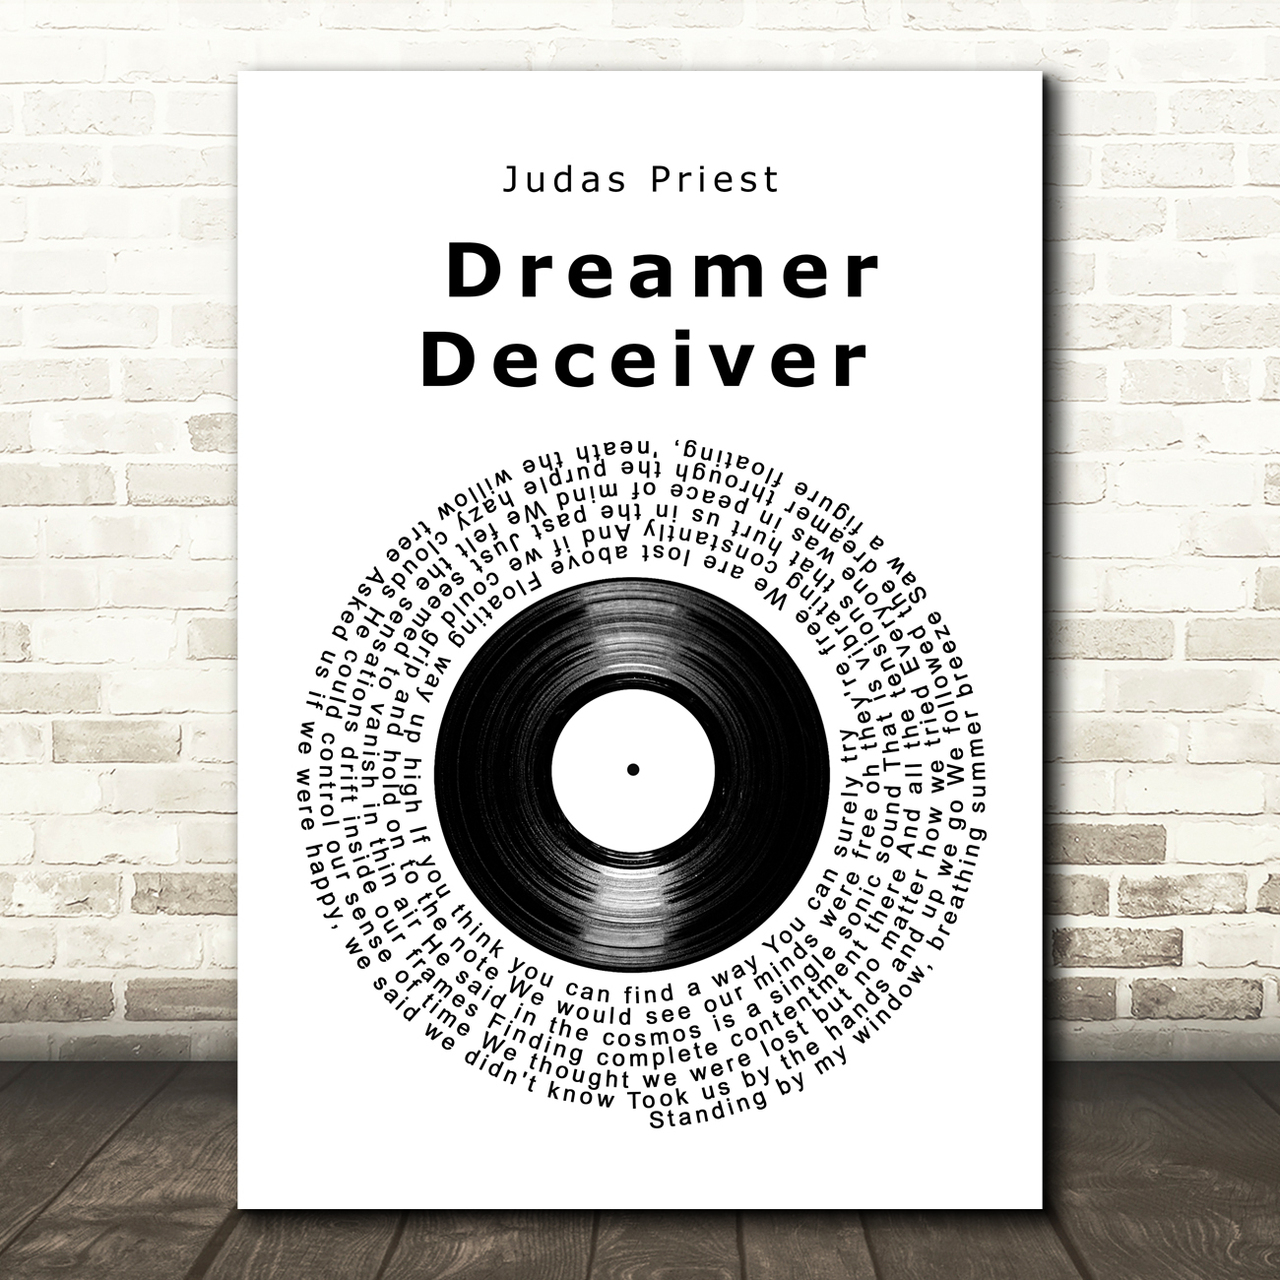 Judas Priest Dreamer Deceiver Vinyl Record Song Lyric Art Print